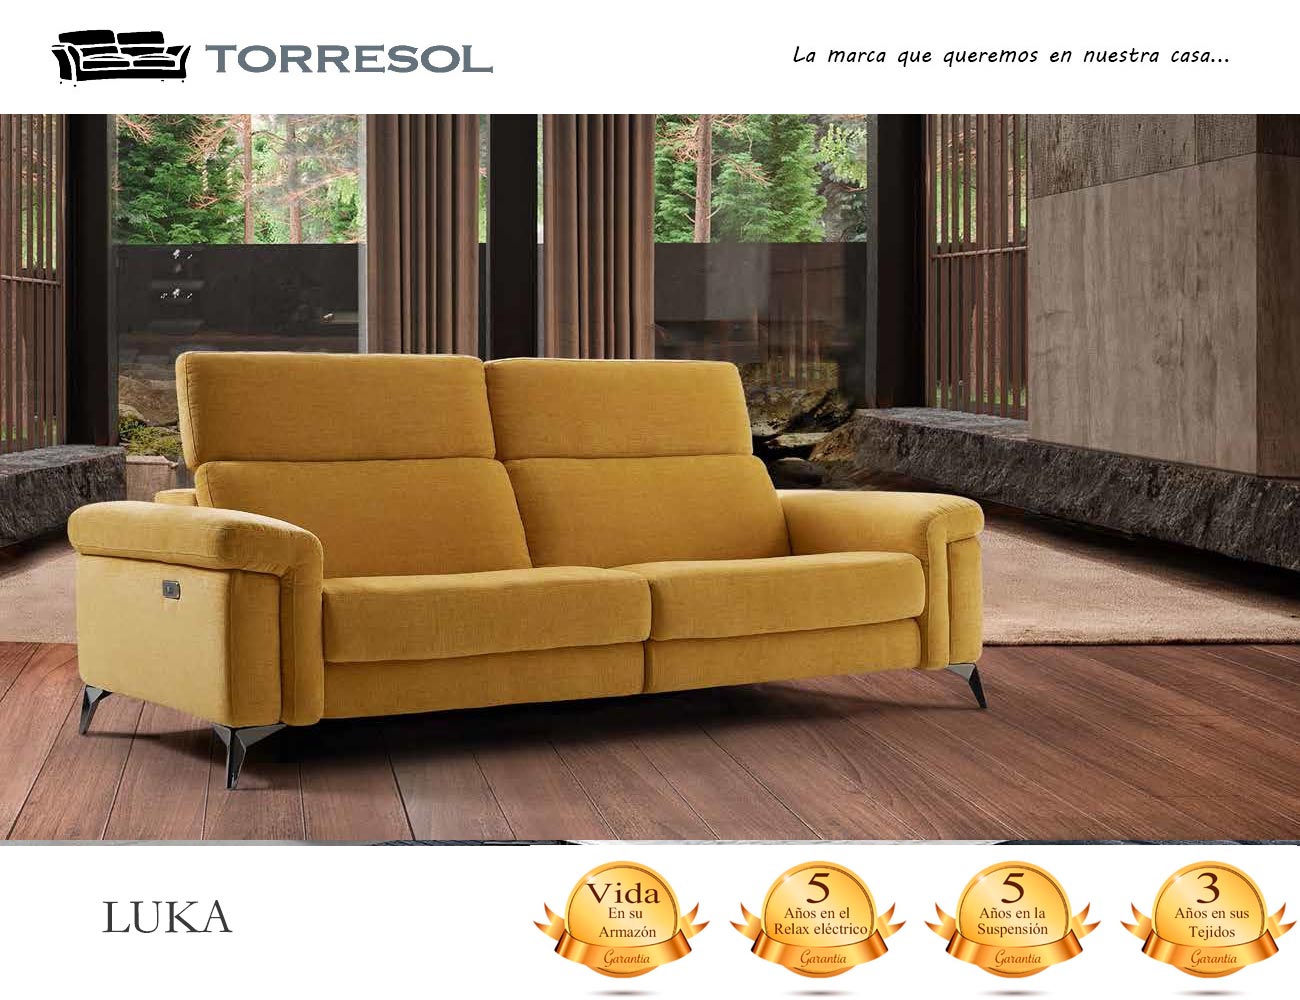 Sofa luka torresol 1